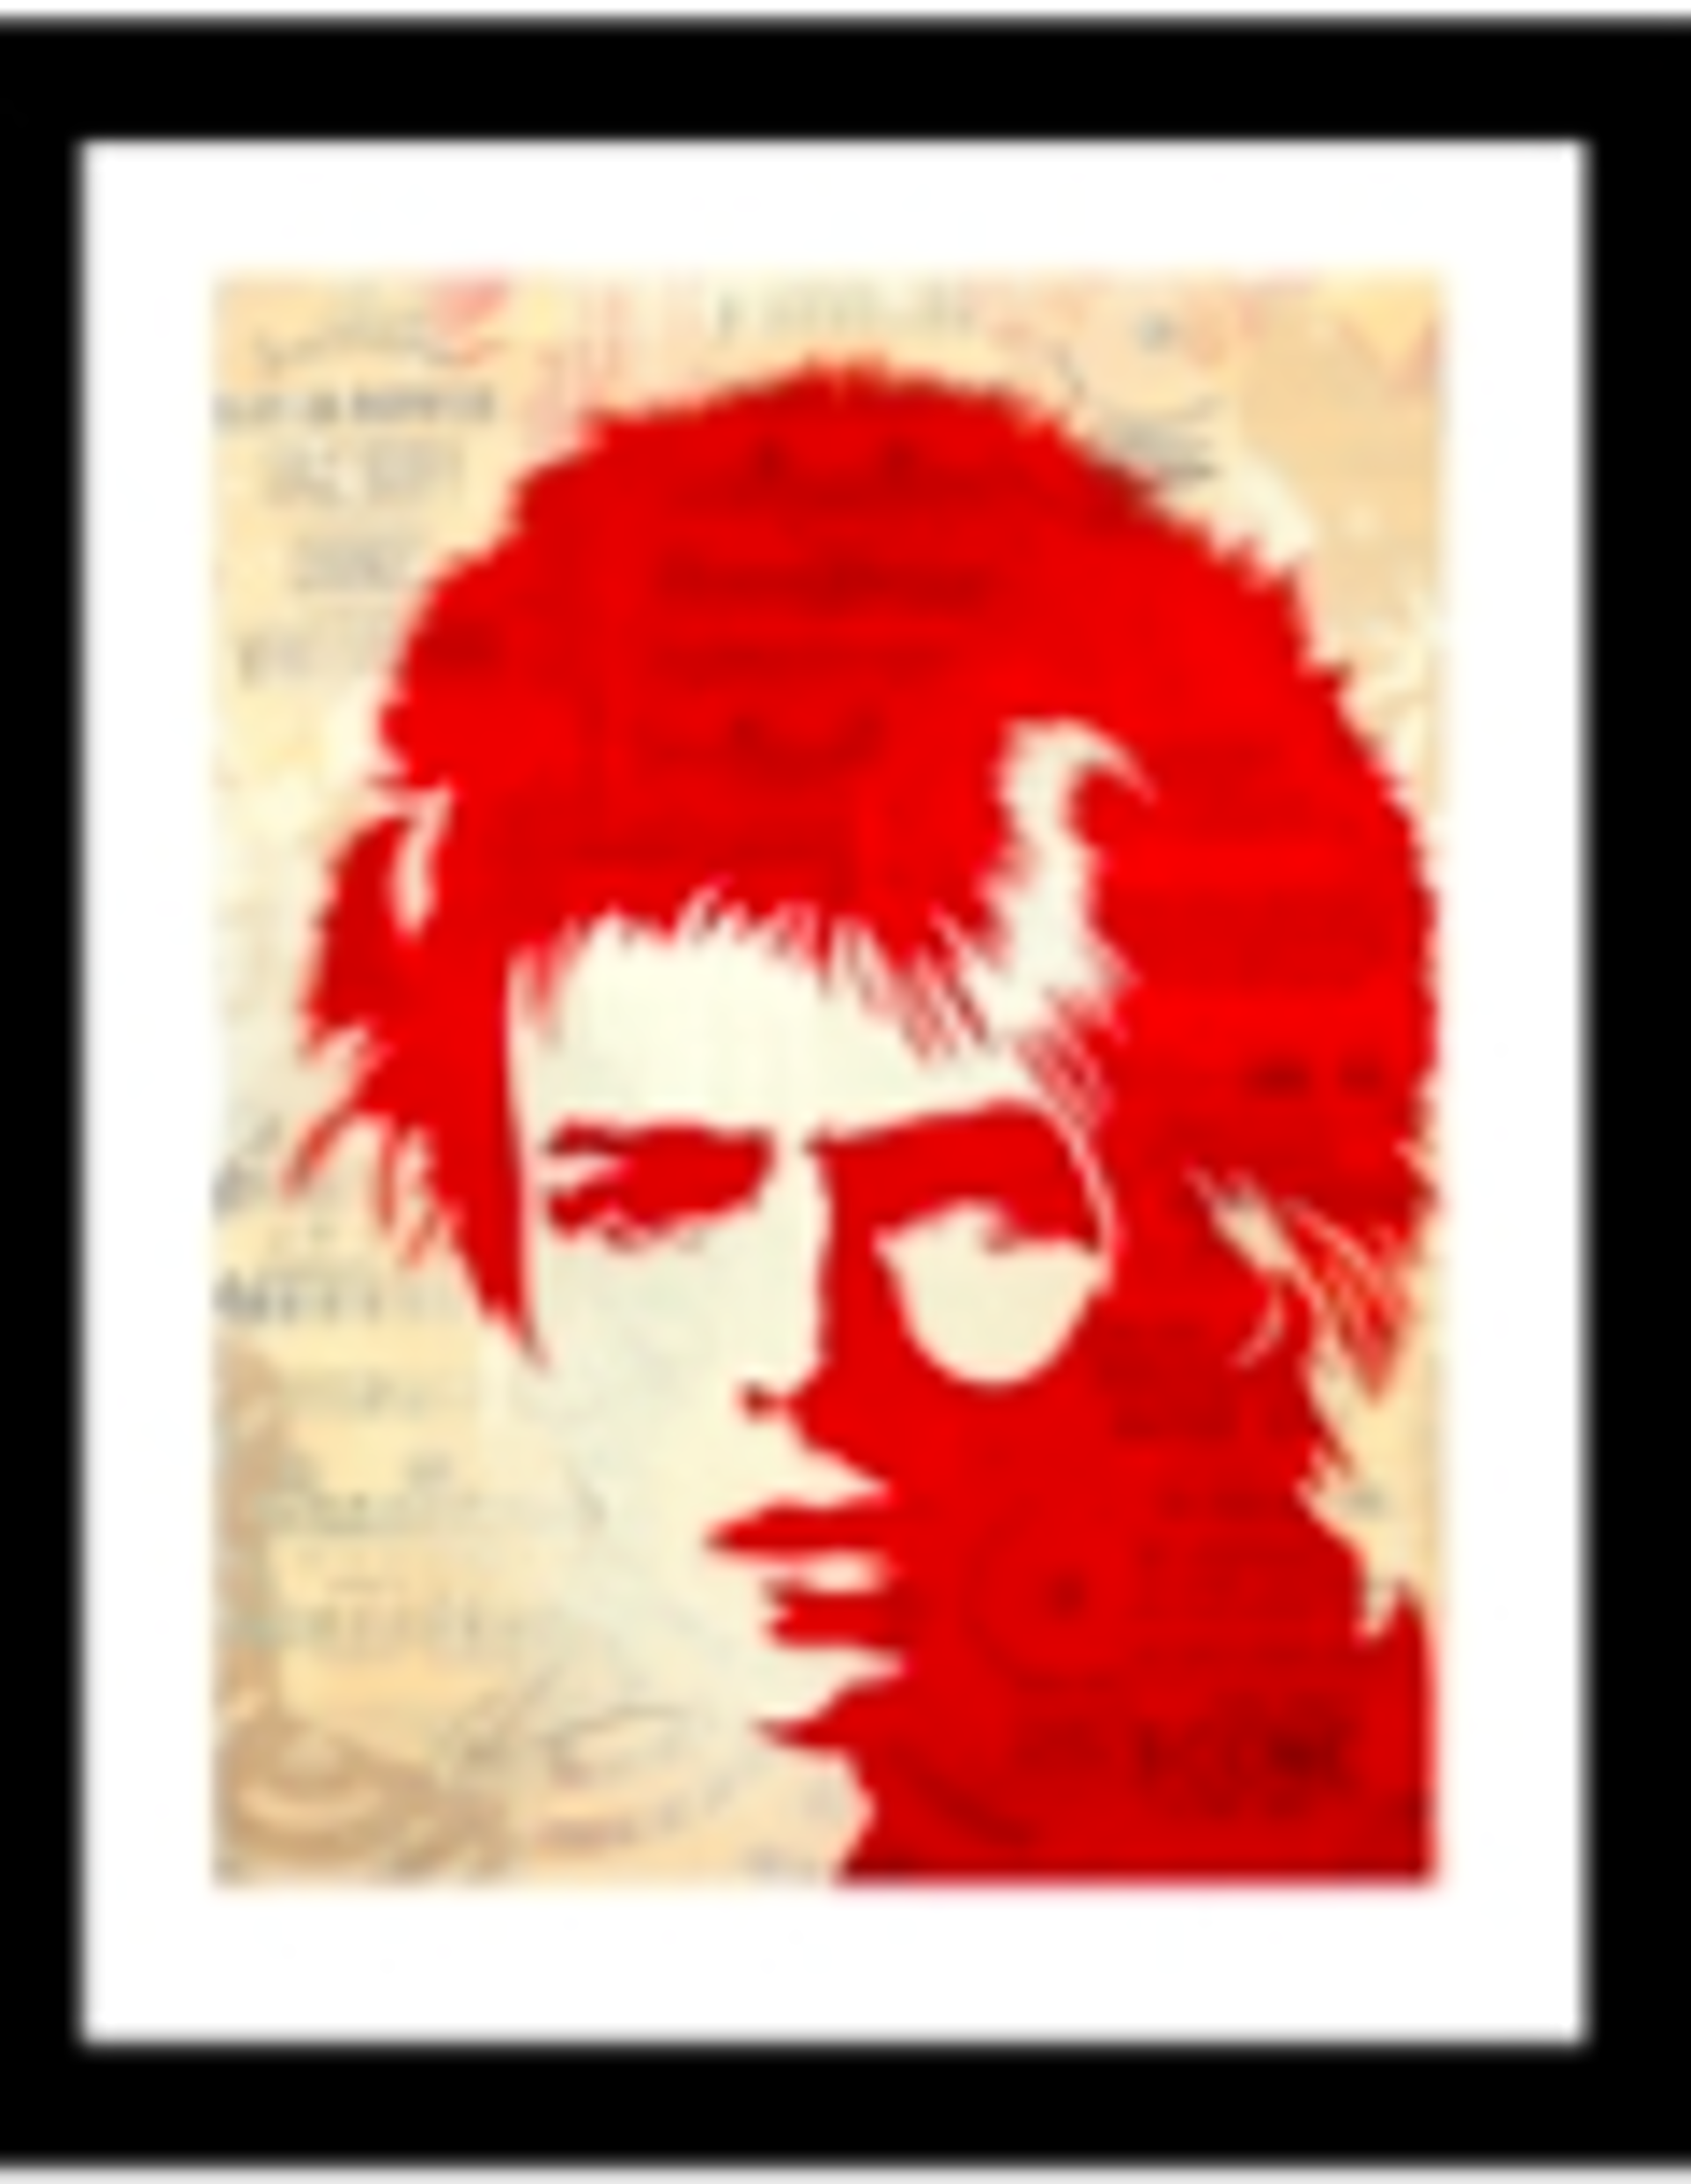 David Bowie by Shepard Fairey